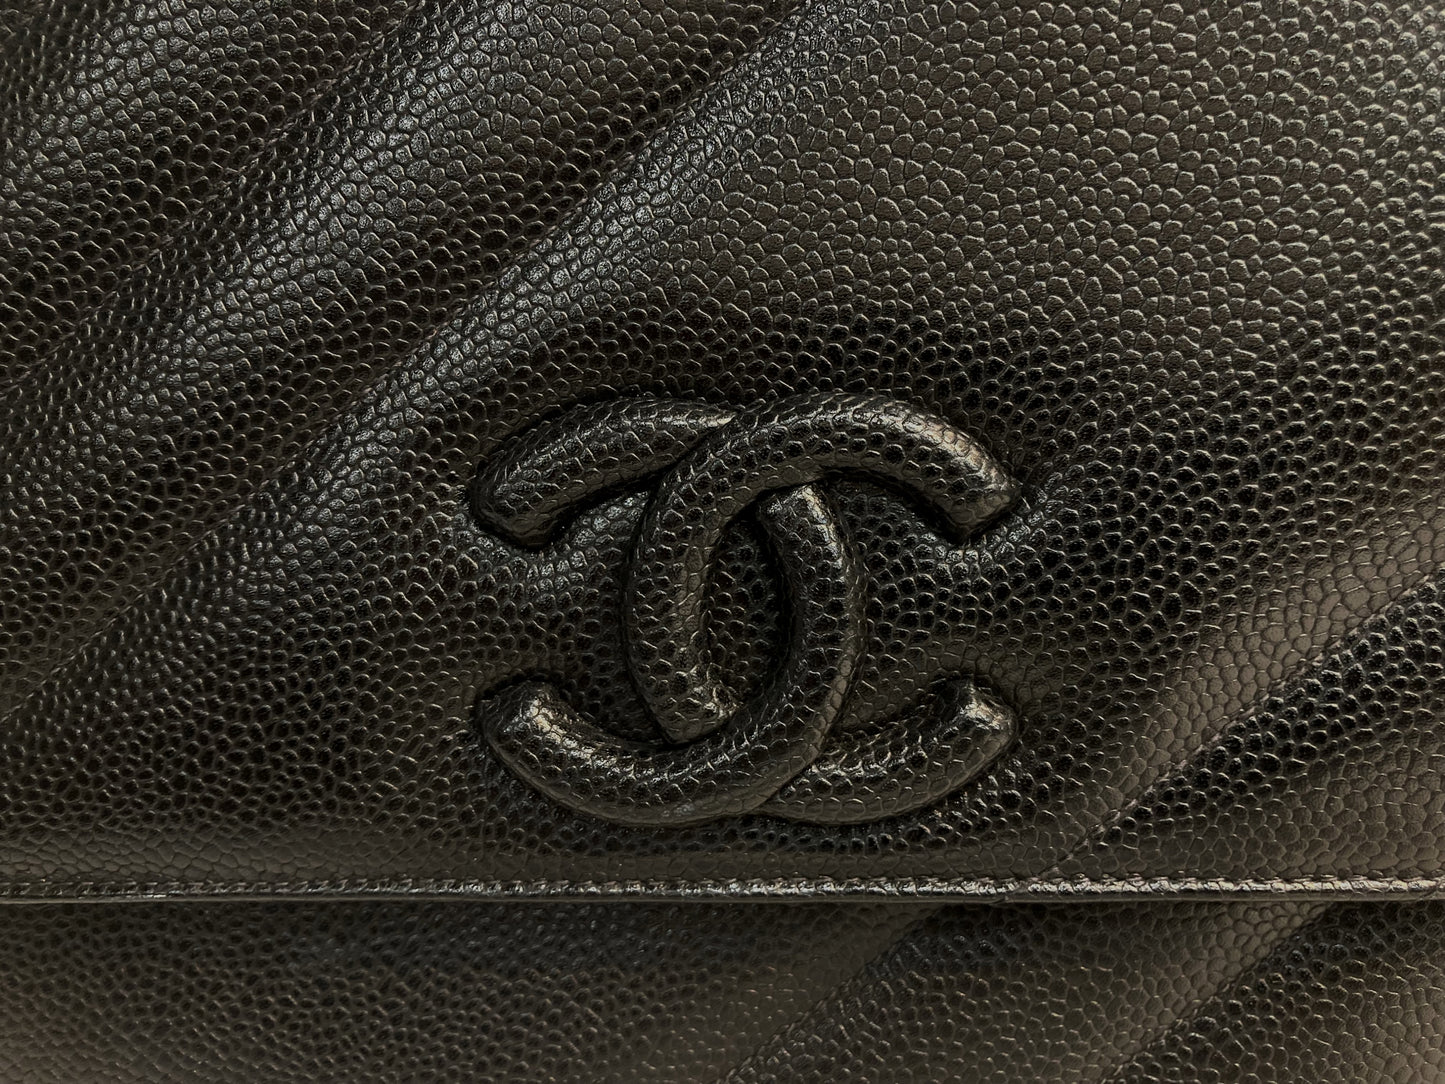 CHANEL Diagonal Caviar Leather Flap Bag Black